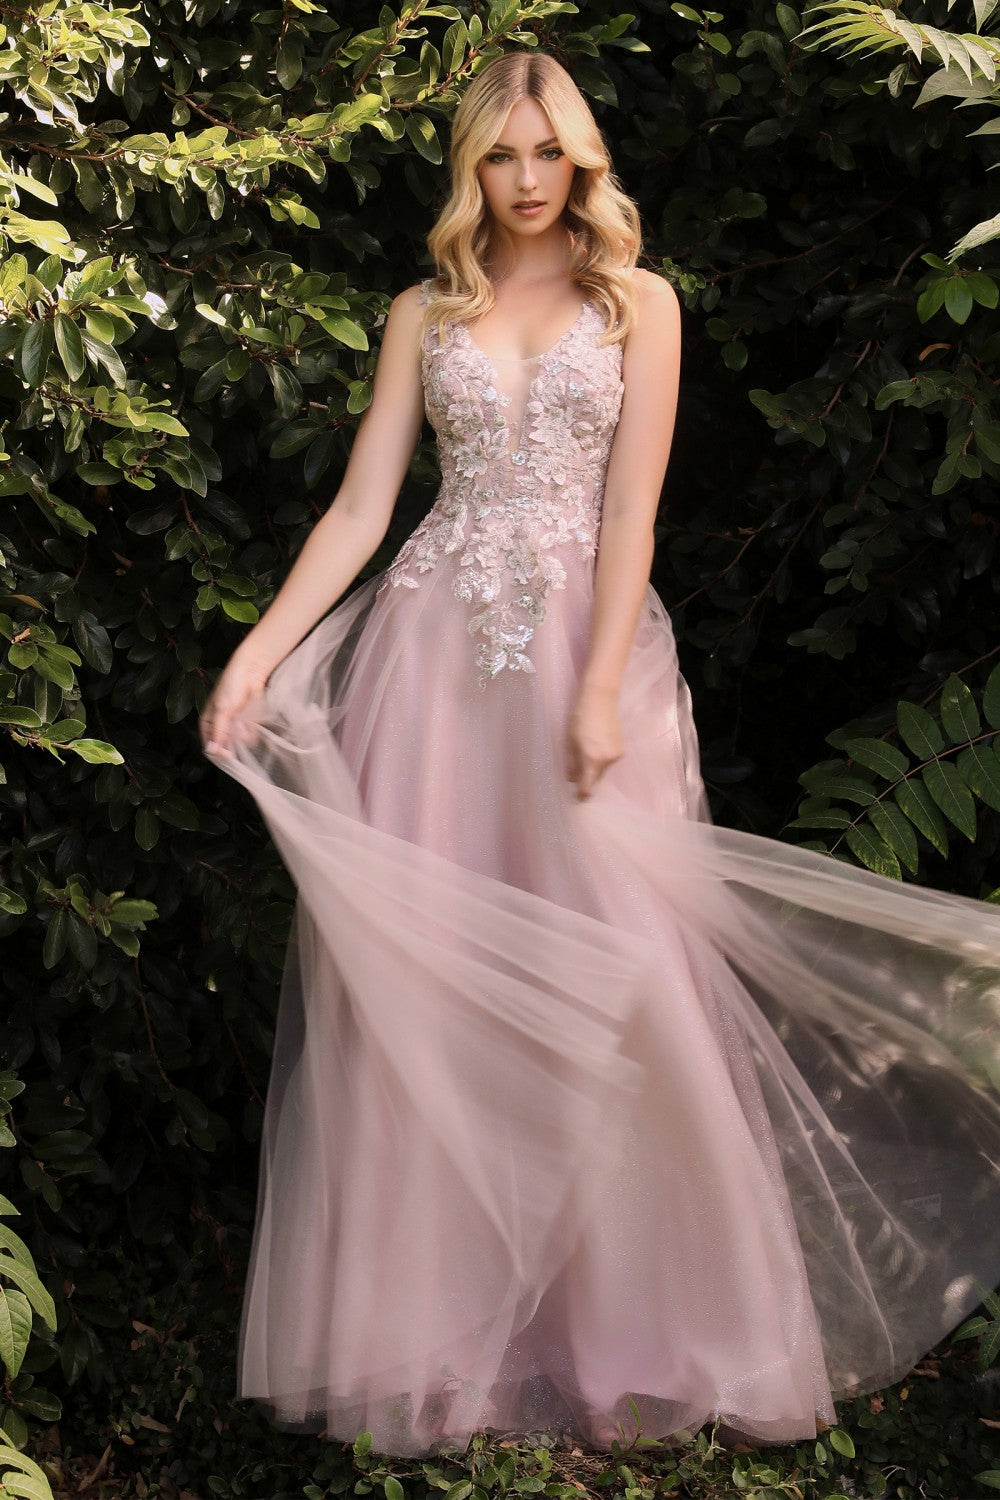 Charm Lace Bodice Tulle Skirt Prom Dress C409TTR-Mauve